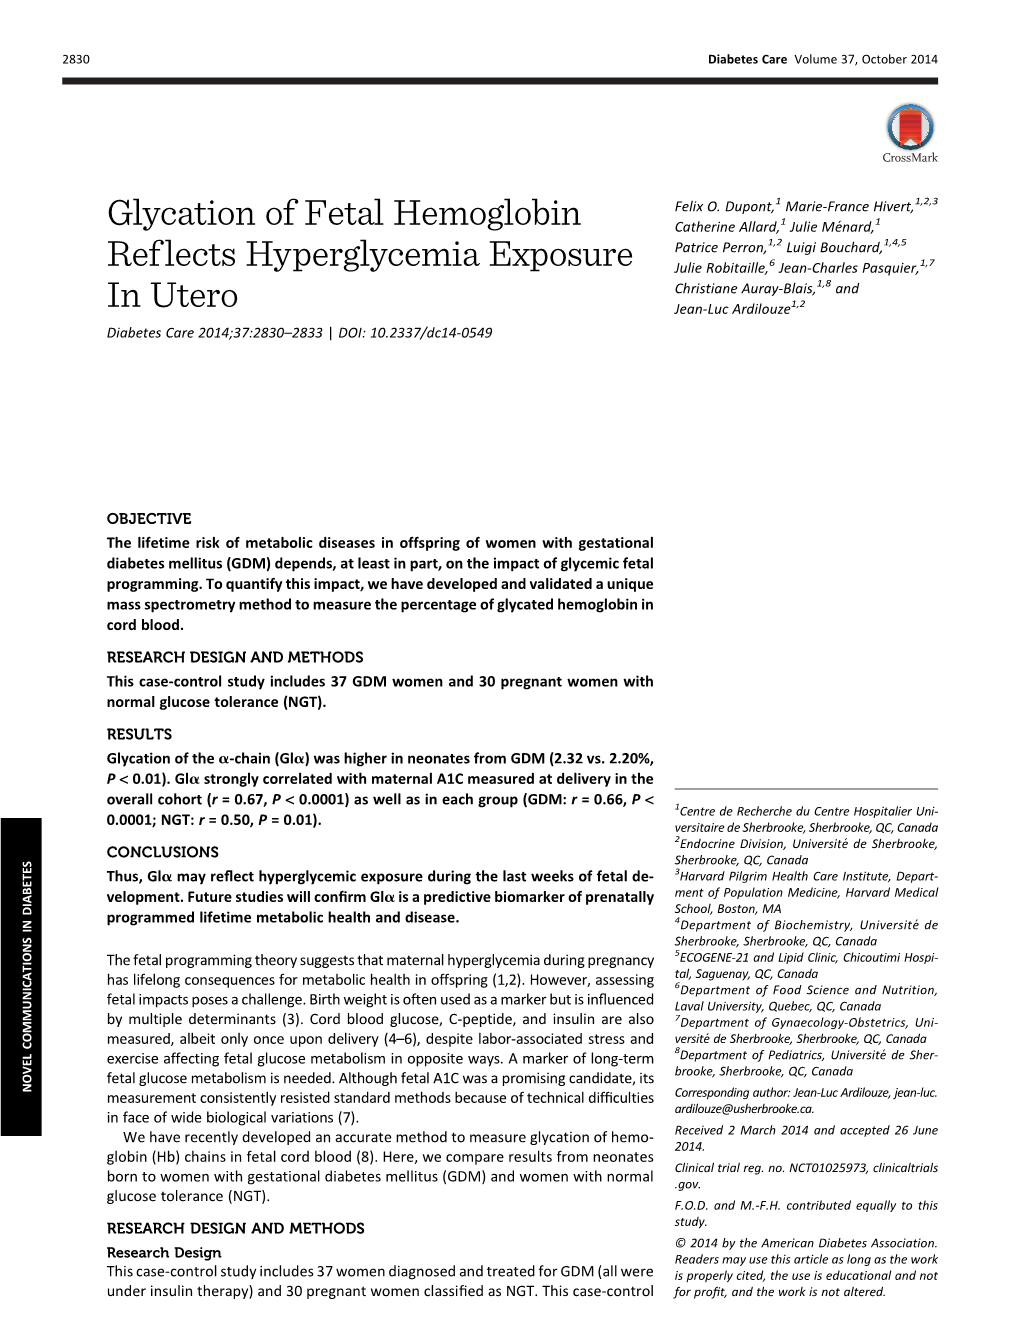 Glycation of Fetal Hemoglobin Reflects Hyperglycemia Exposure